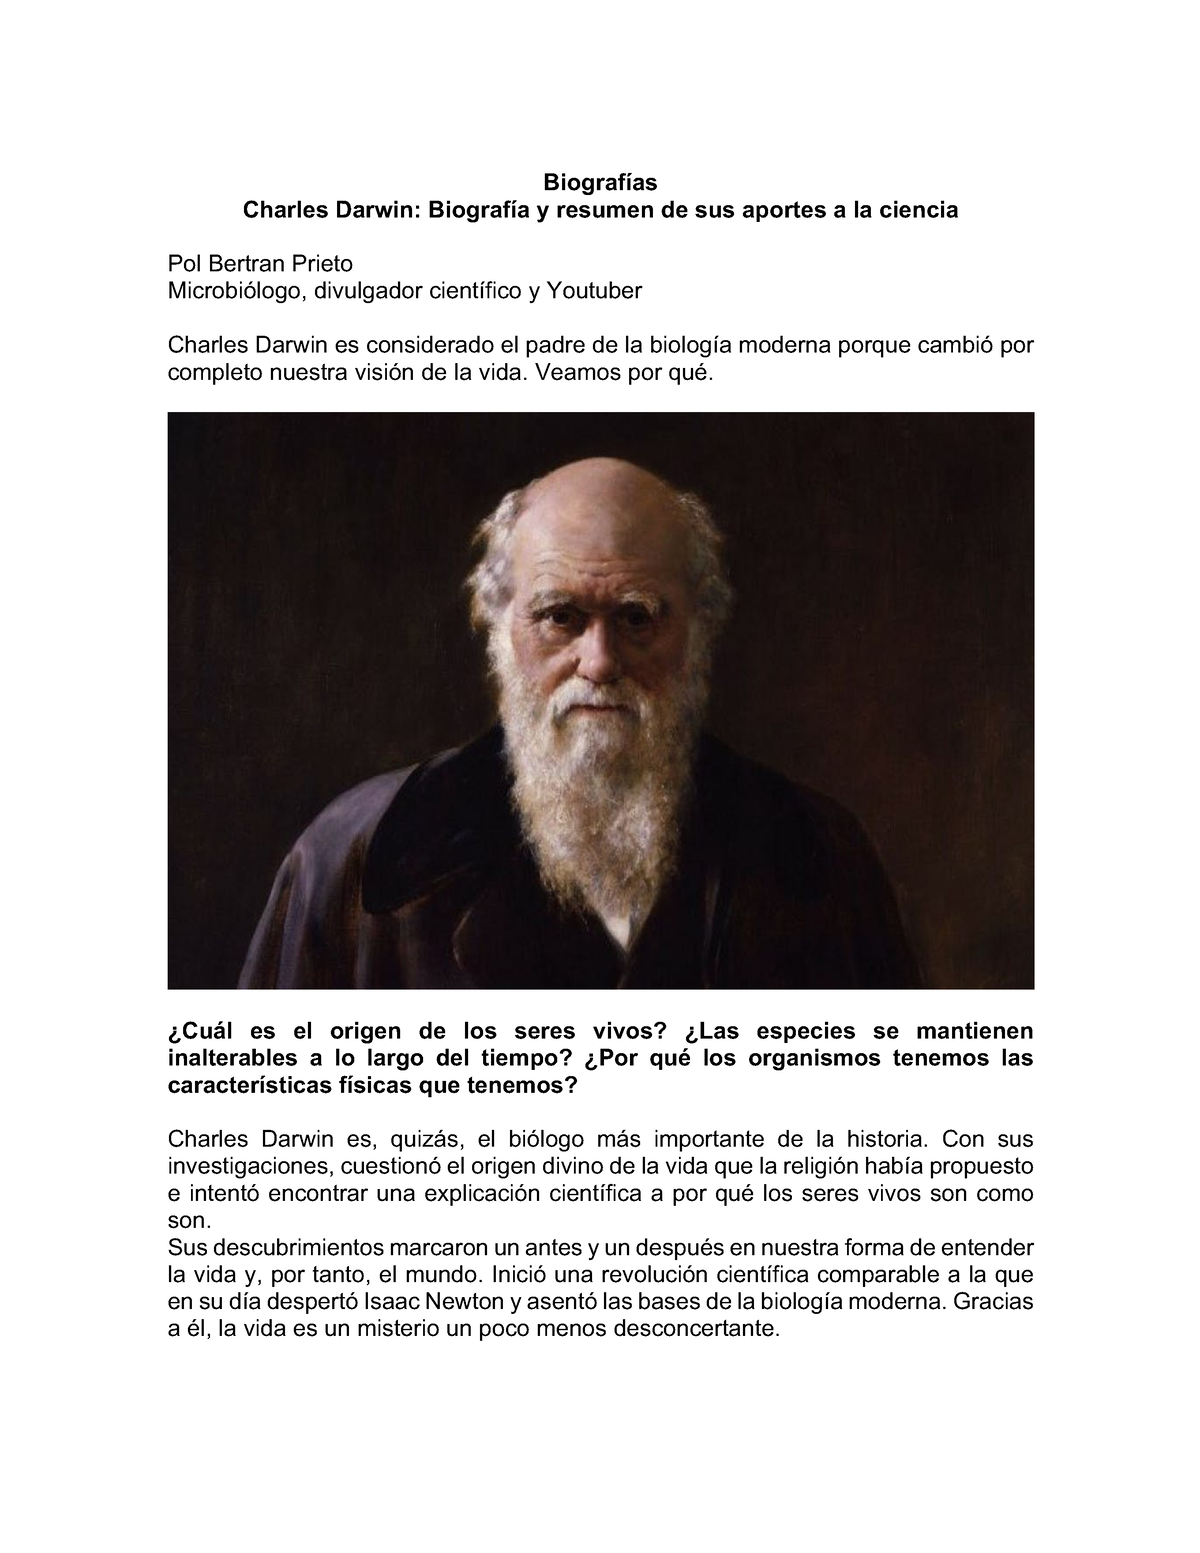 Biografías Charles Darwin - Biografías Charles Darwin: Biografía y resumen  de sus aportes a la - Studocu